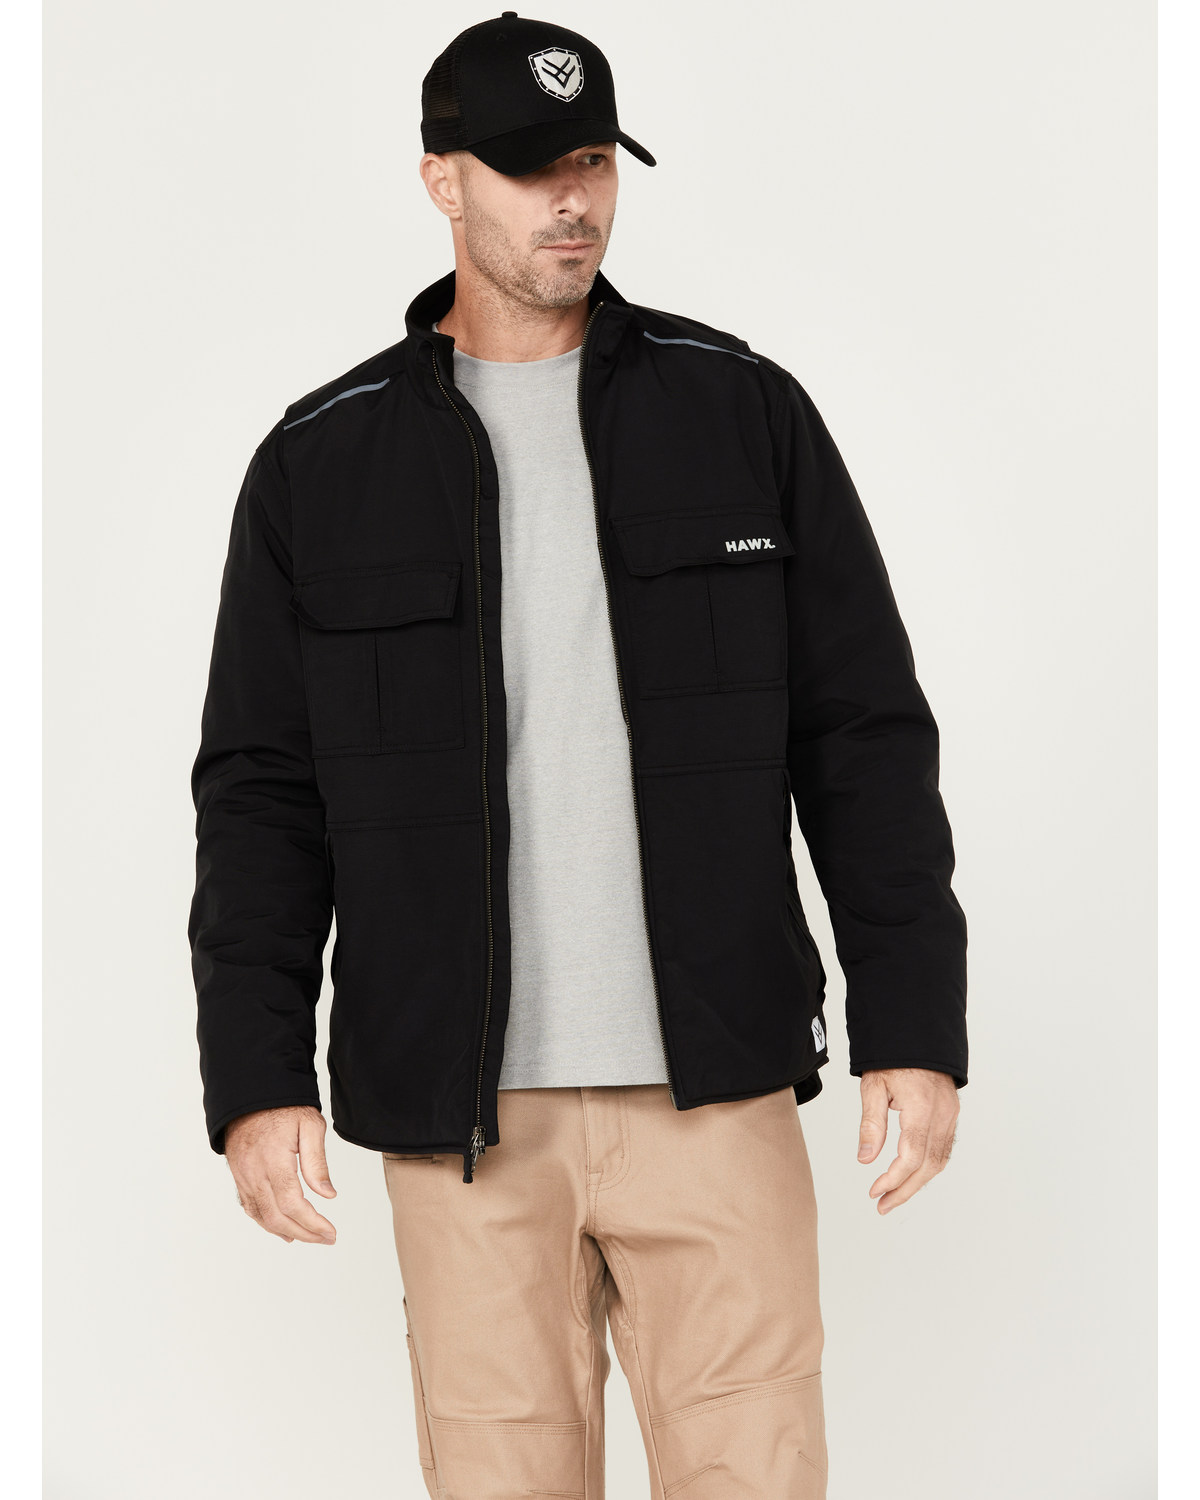 Hawx Men's Extreme Cold Work Jacket